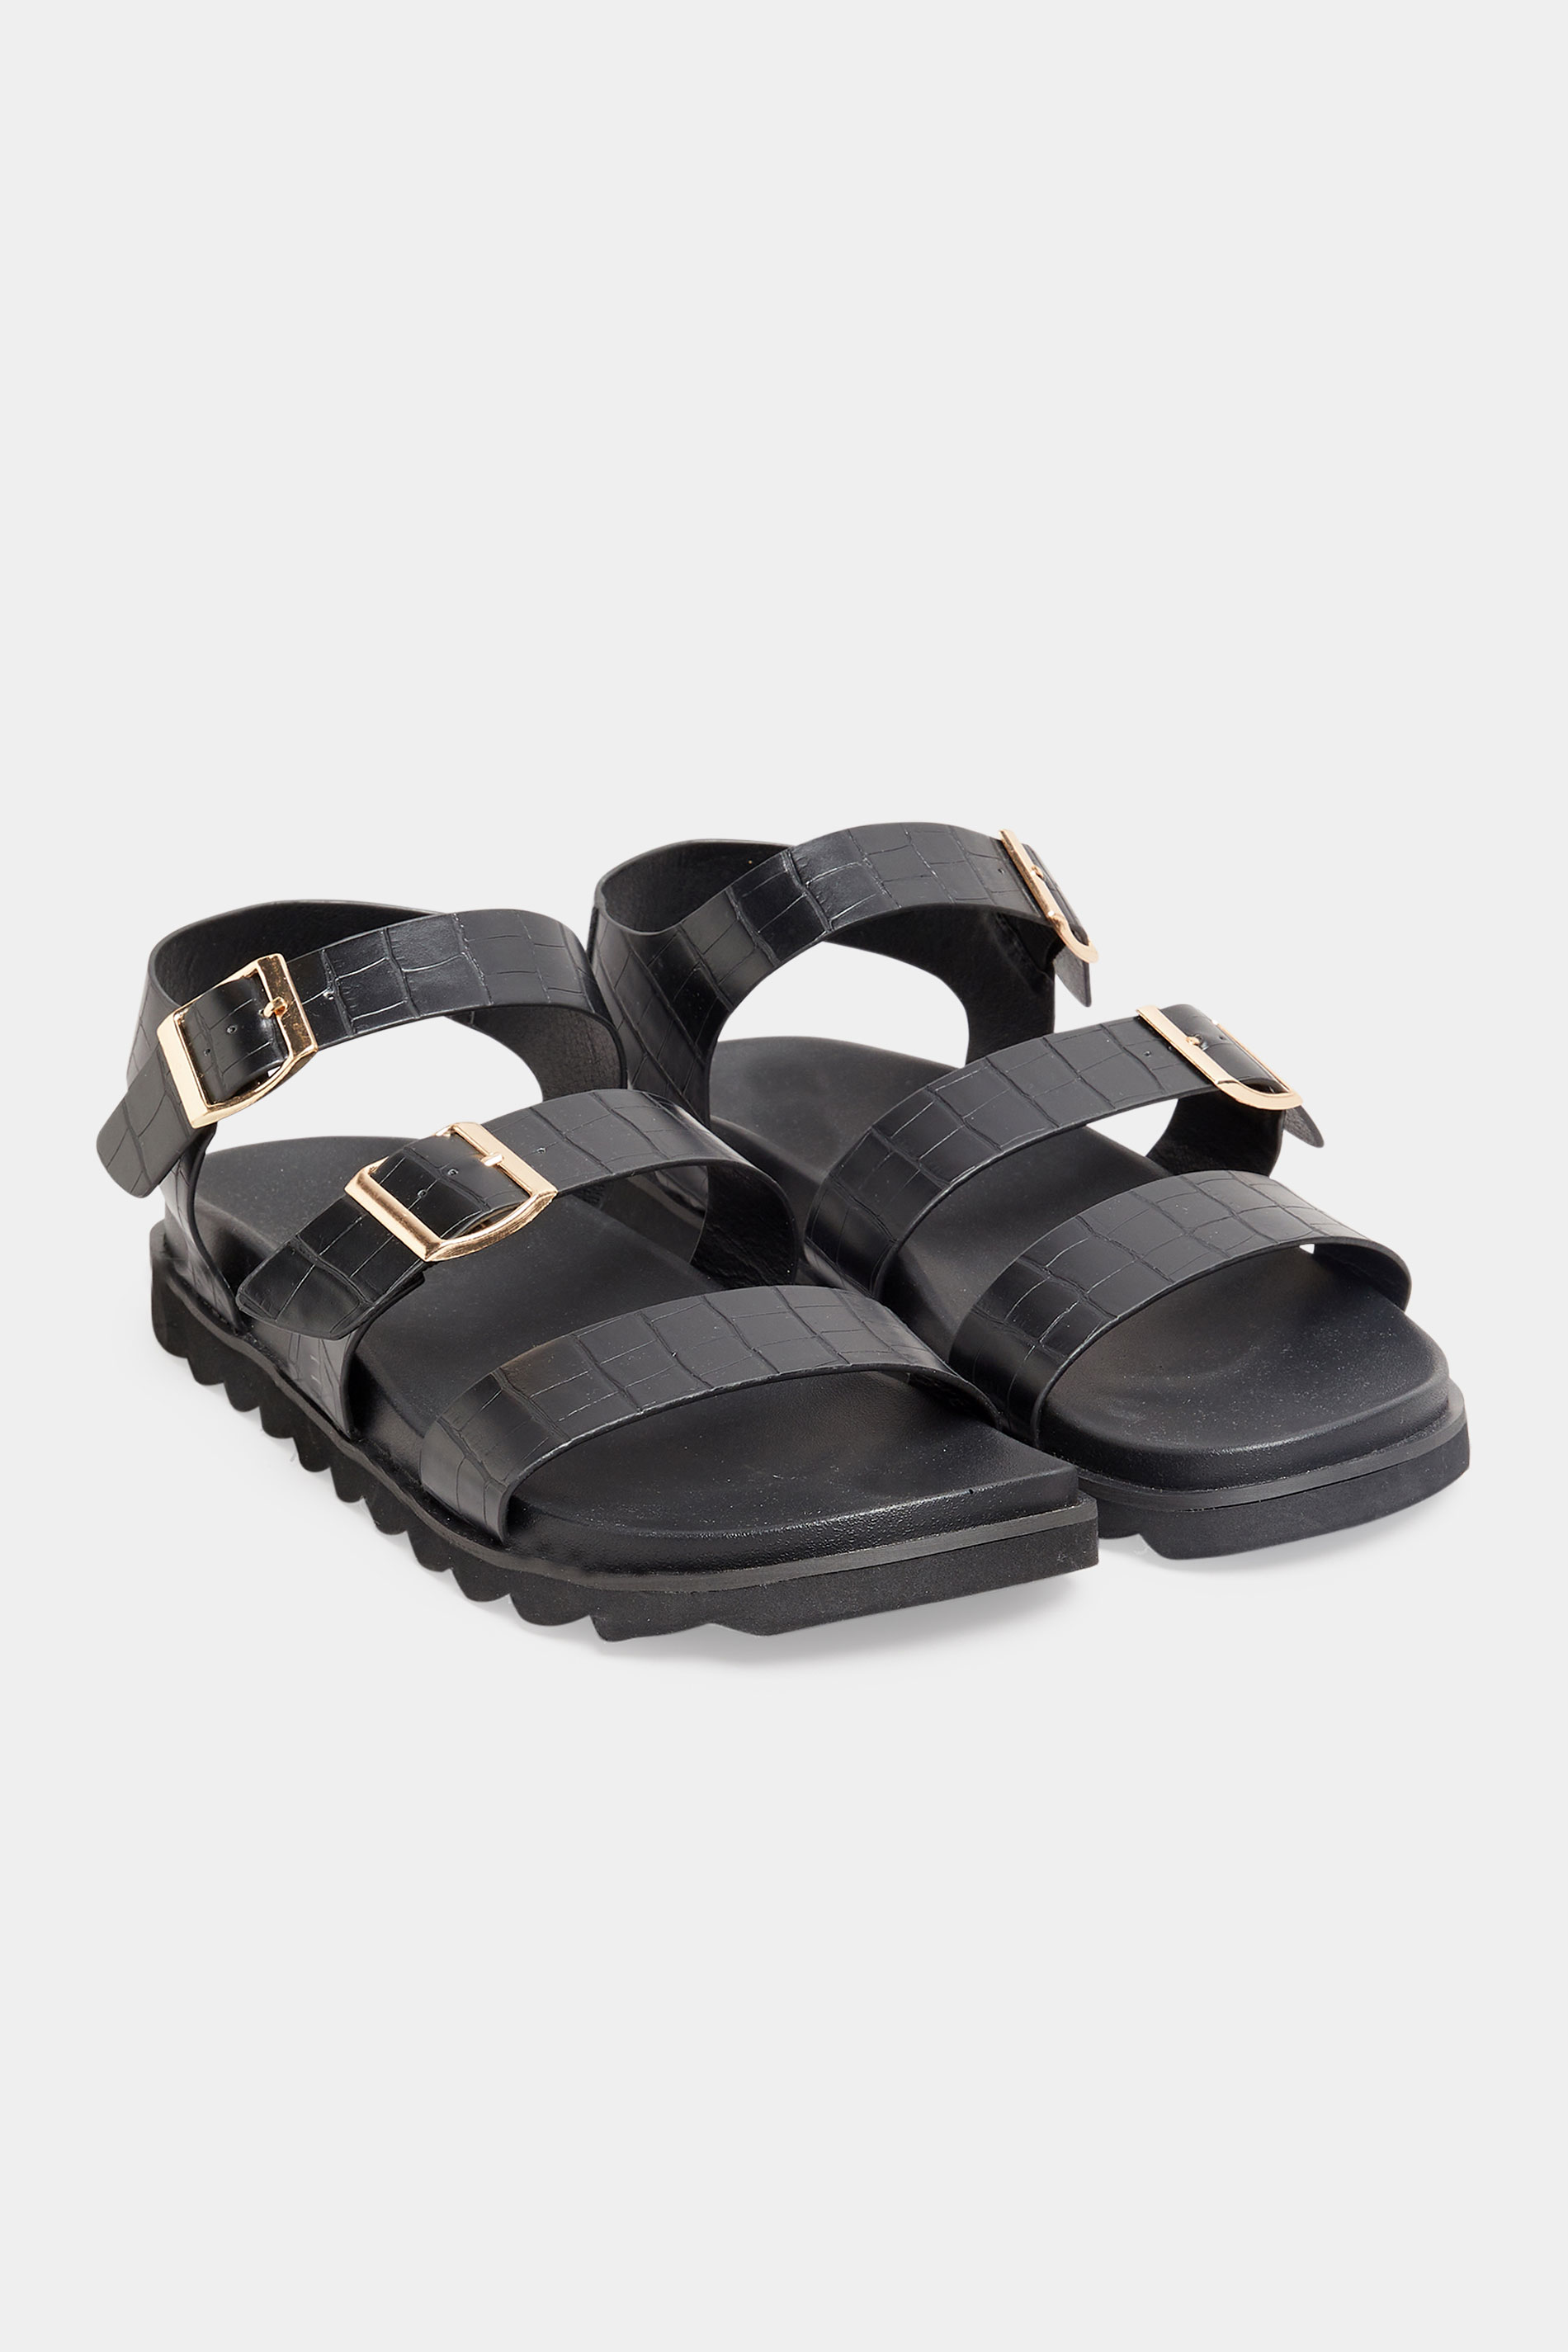 Grande taille  Sandals Grande taille  Flat Sandals | LTS Black Croc Buckle Strap Sandals In Standard D Fit - TI24942